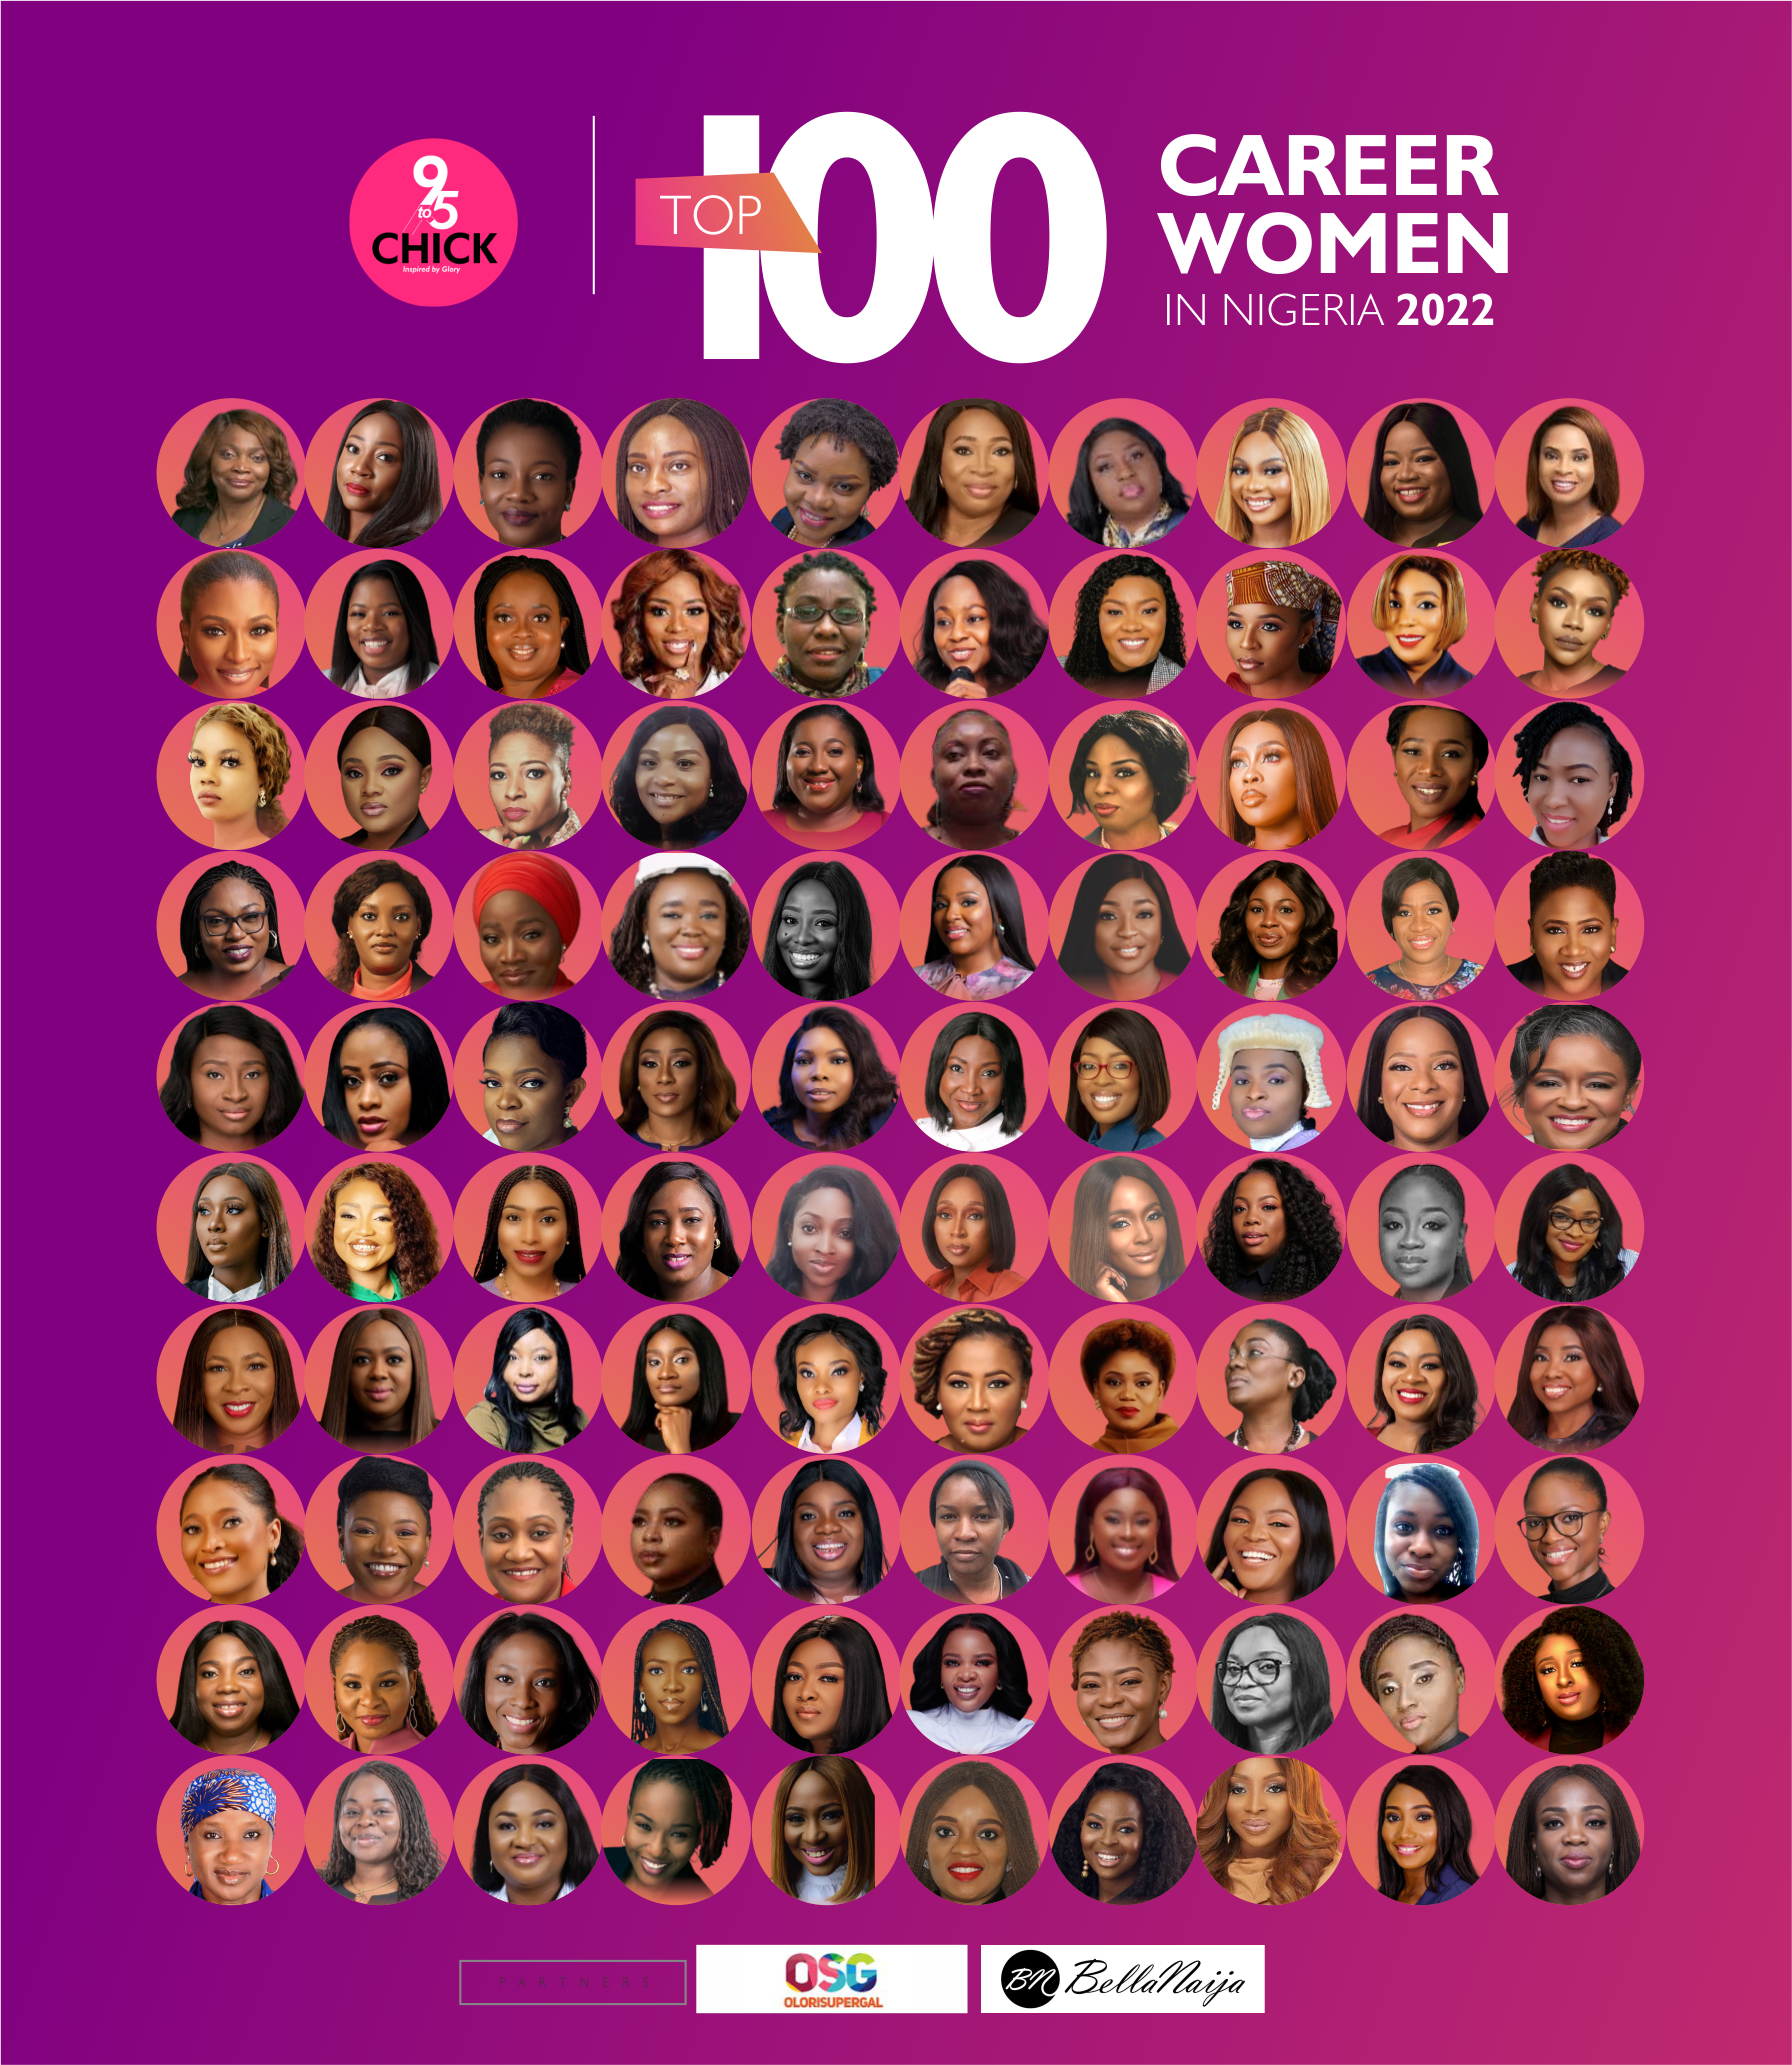 Oluwadamilola Olatunji, Adesola Arogundade, Toyosi Odukoya Make 9to5Chick's Top  100 Career Women 2022 List | BellaNaija